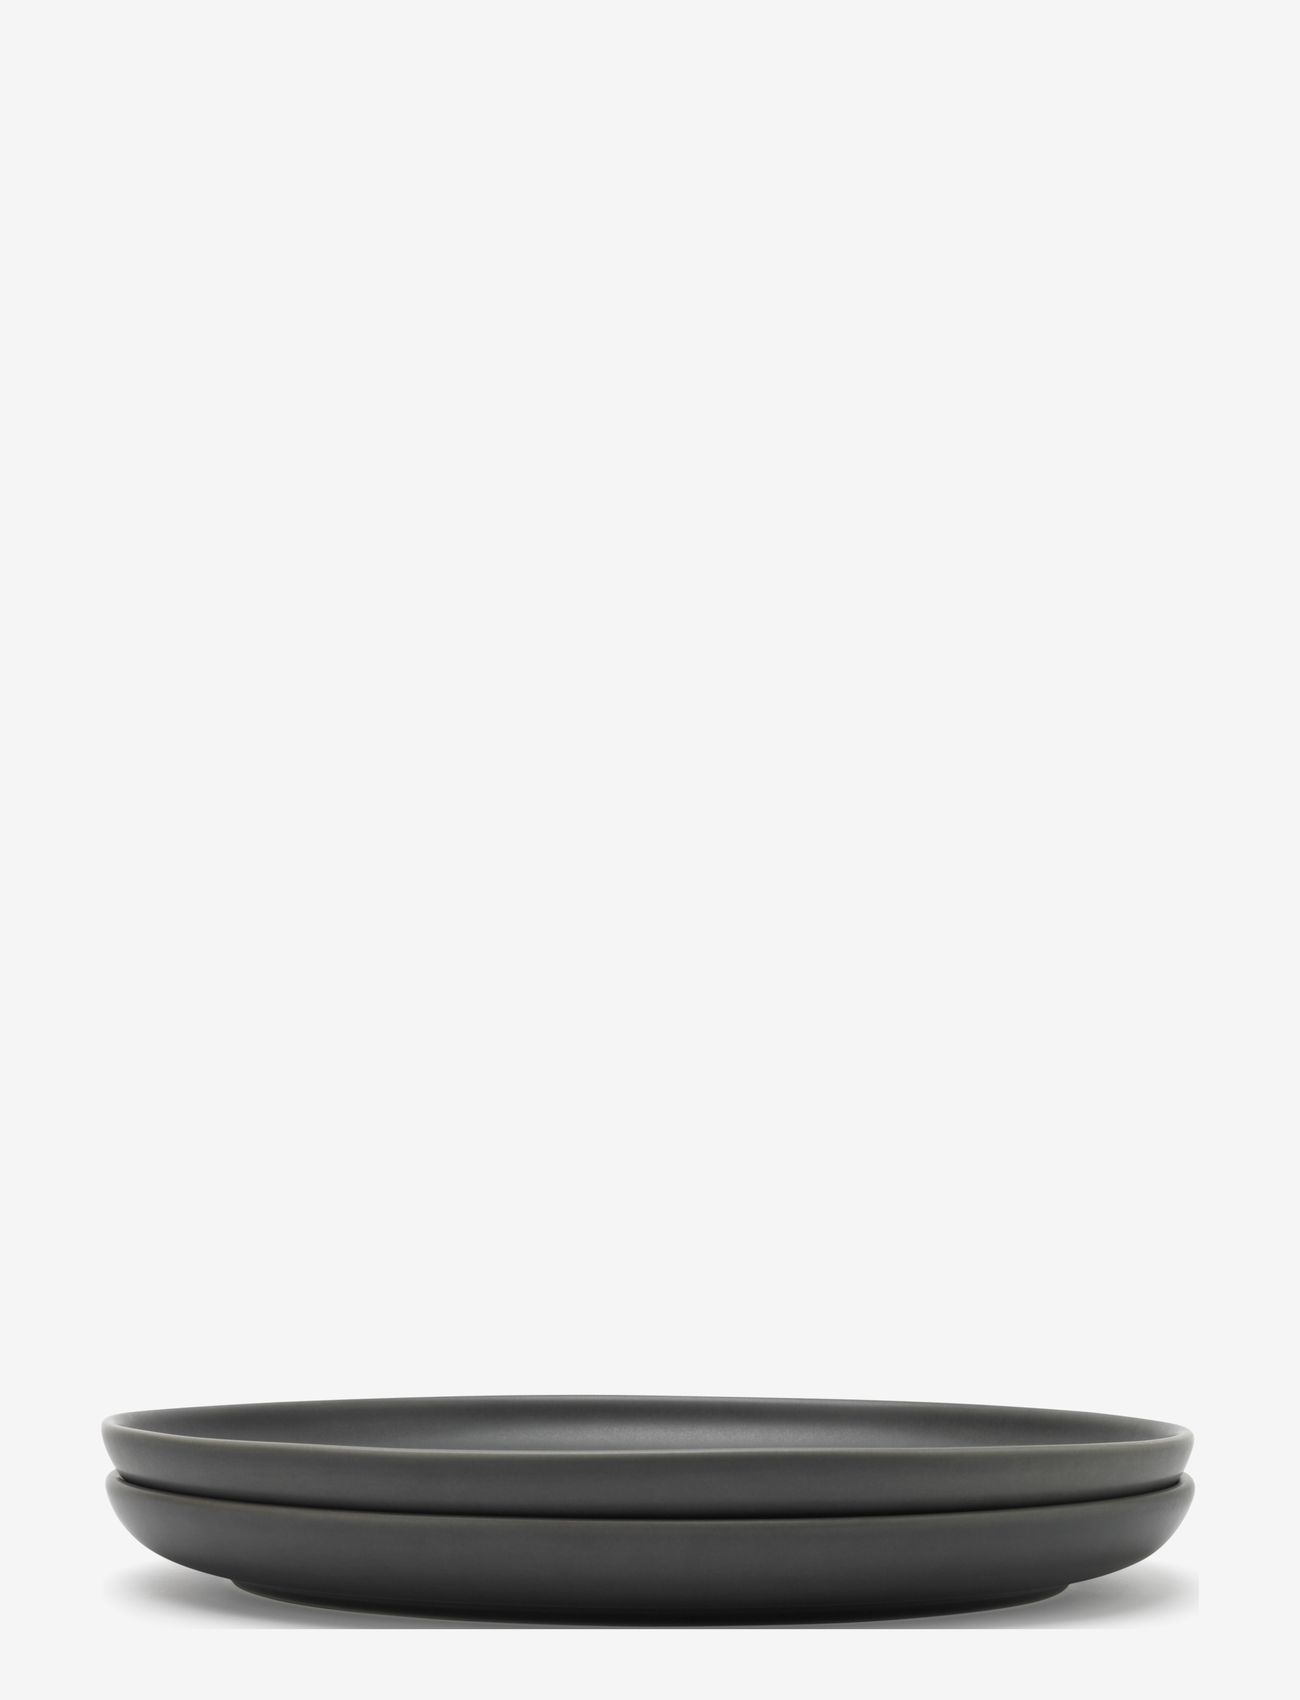 Knabstrup Keramik - Tavola tallerken, 2 stk. - laveste priser - grey - 0